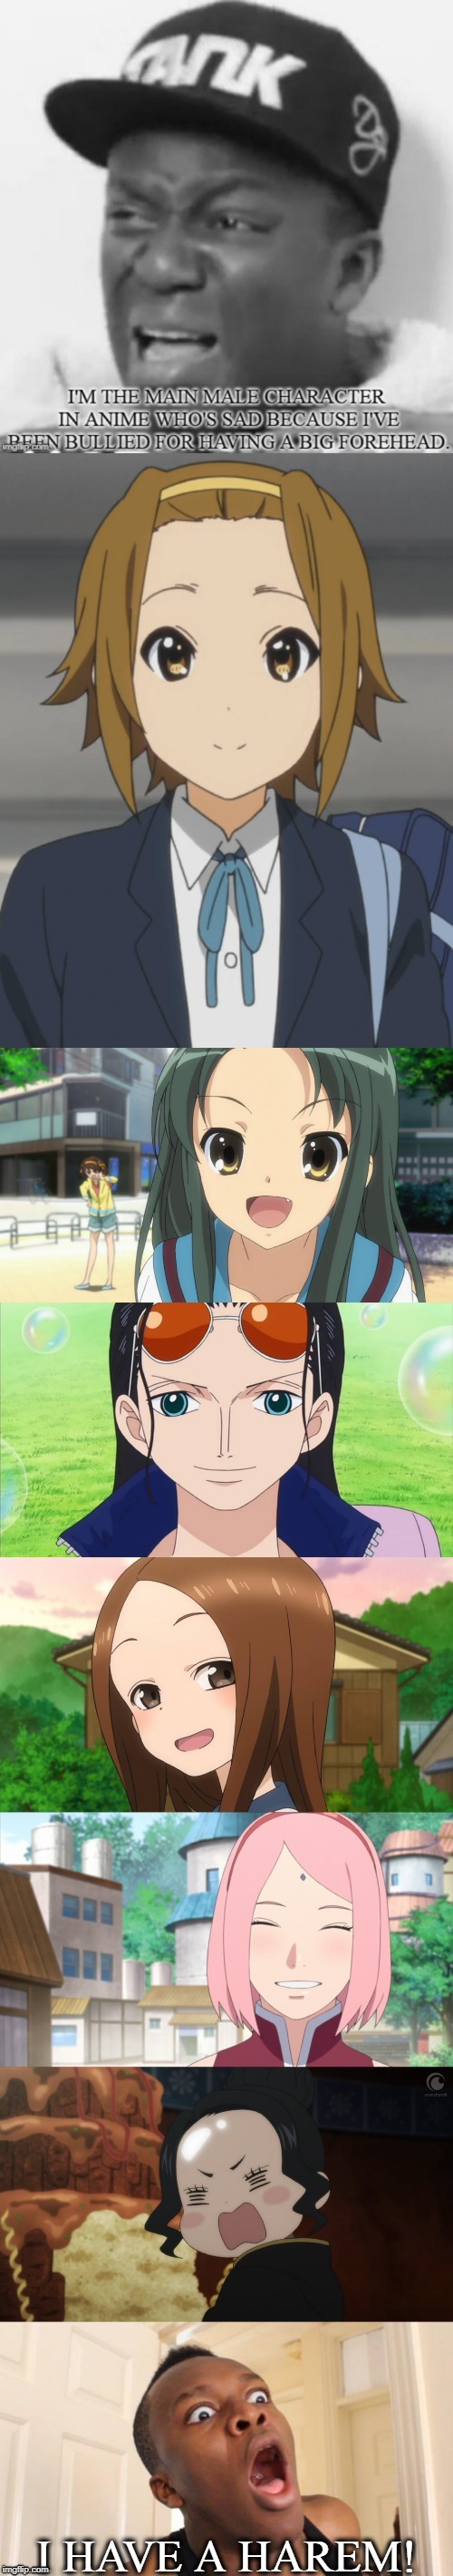 KSI the Anime. | image tagged in ksi,anime,animeme,anime meme | made w/ Imgflip meme maker